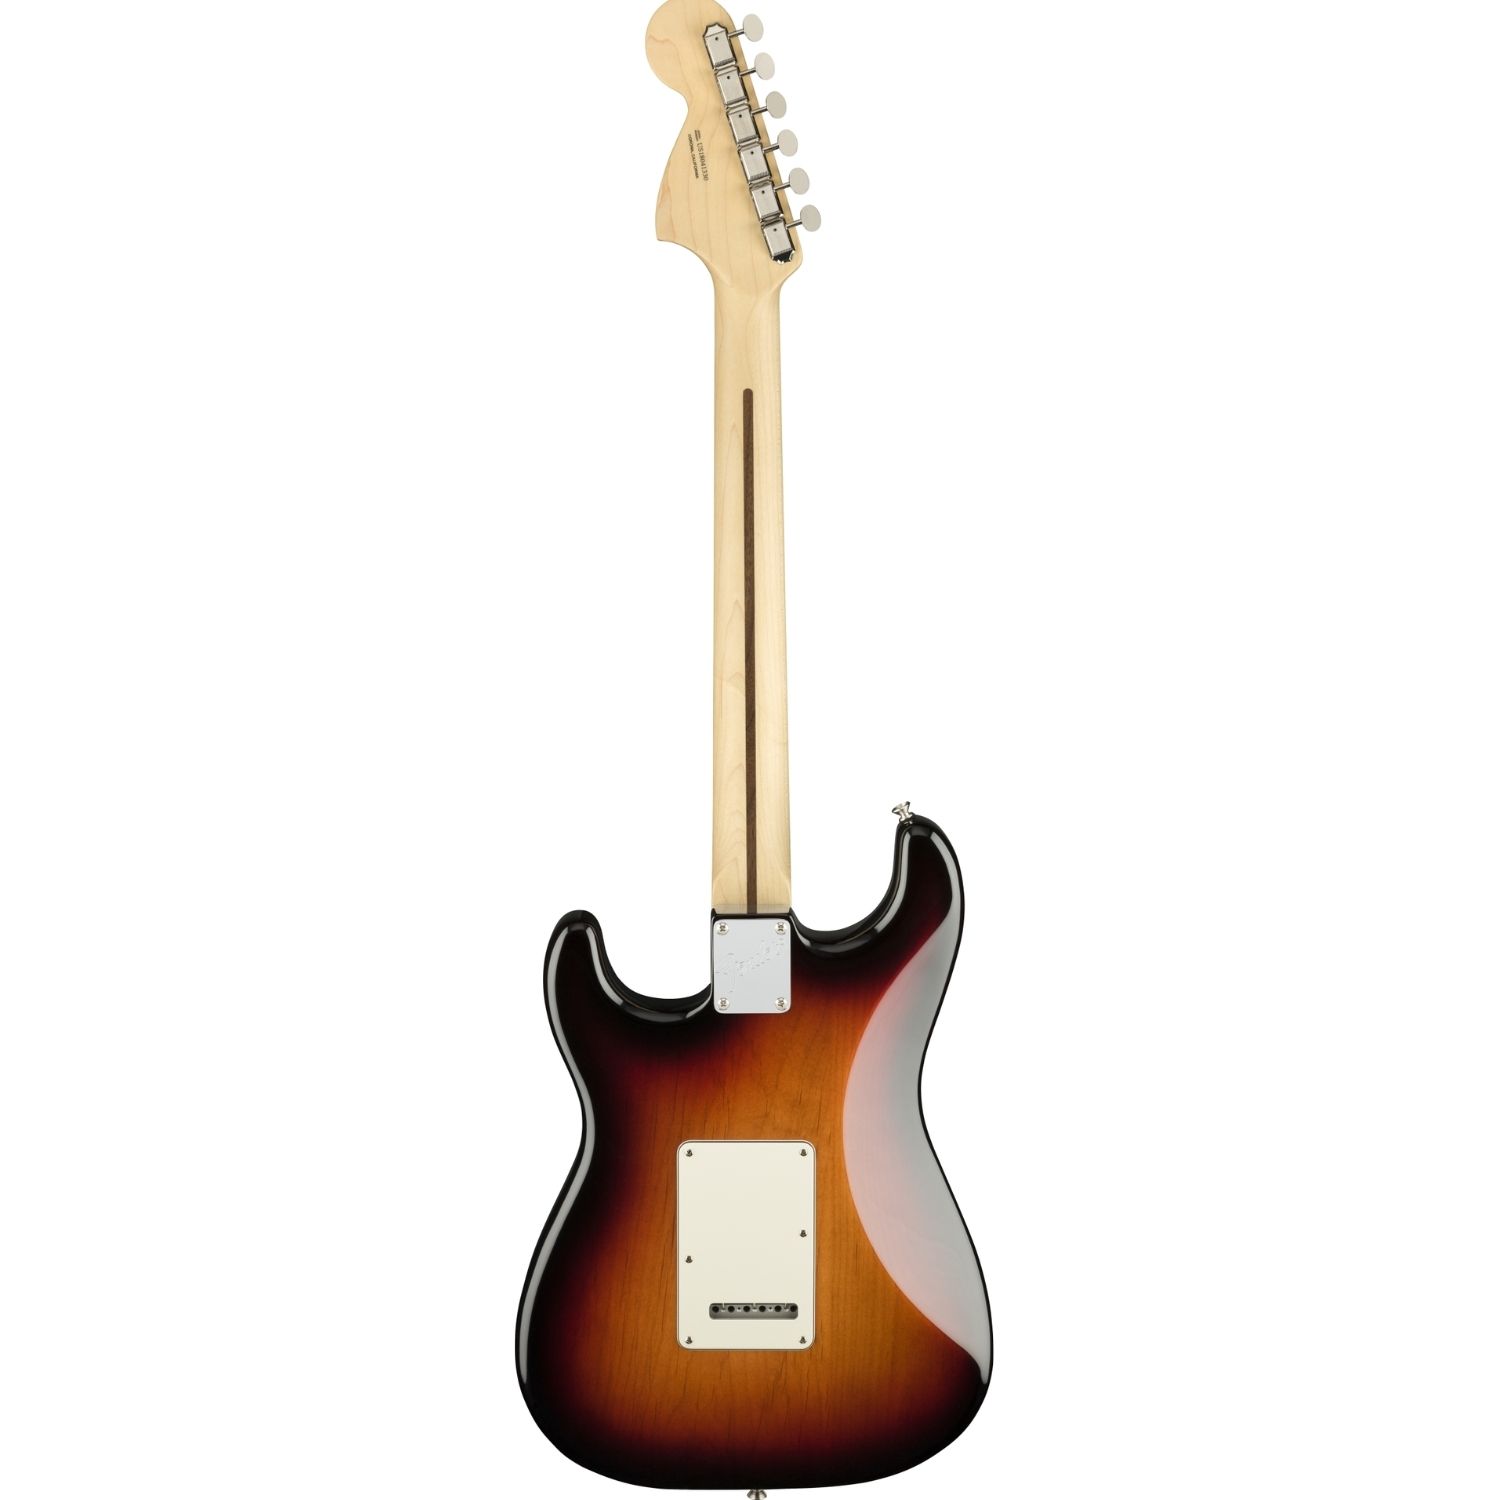 Fender AM Performer Strat, Alder Body, Rosewood Fingerboard, HSS Yosemite Pickups online price in India